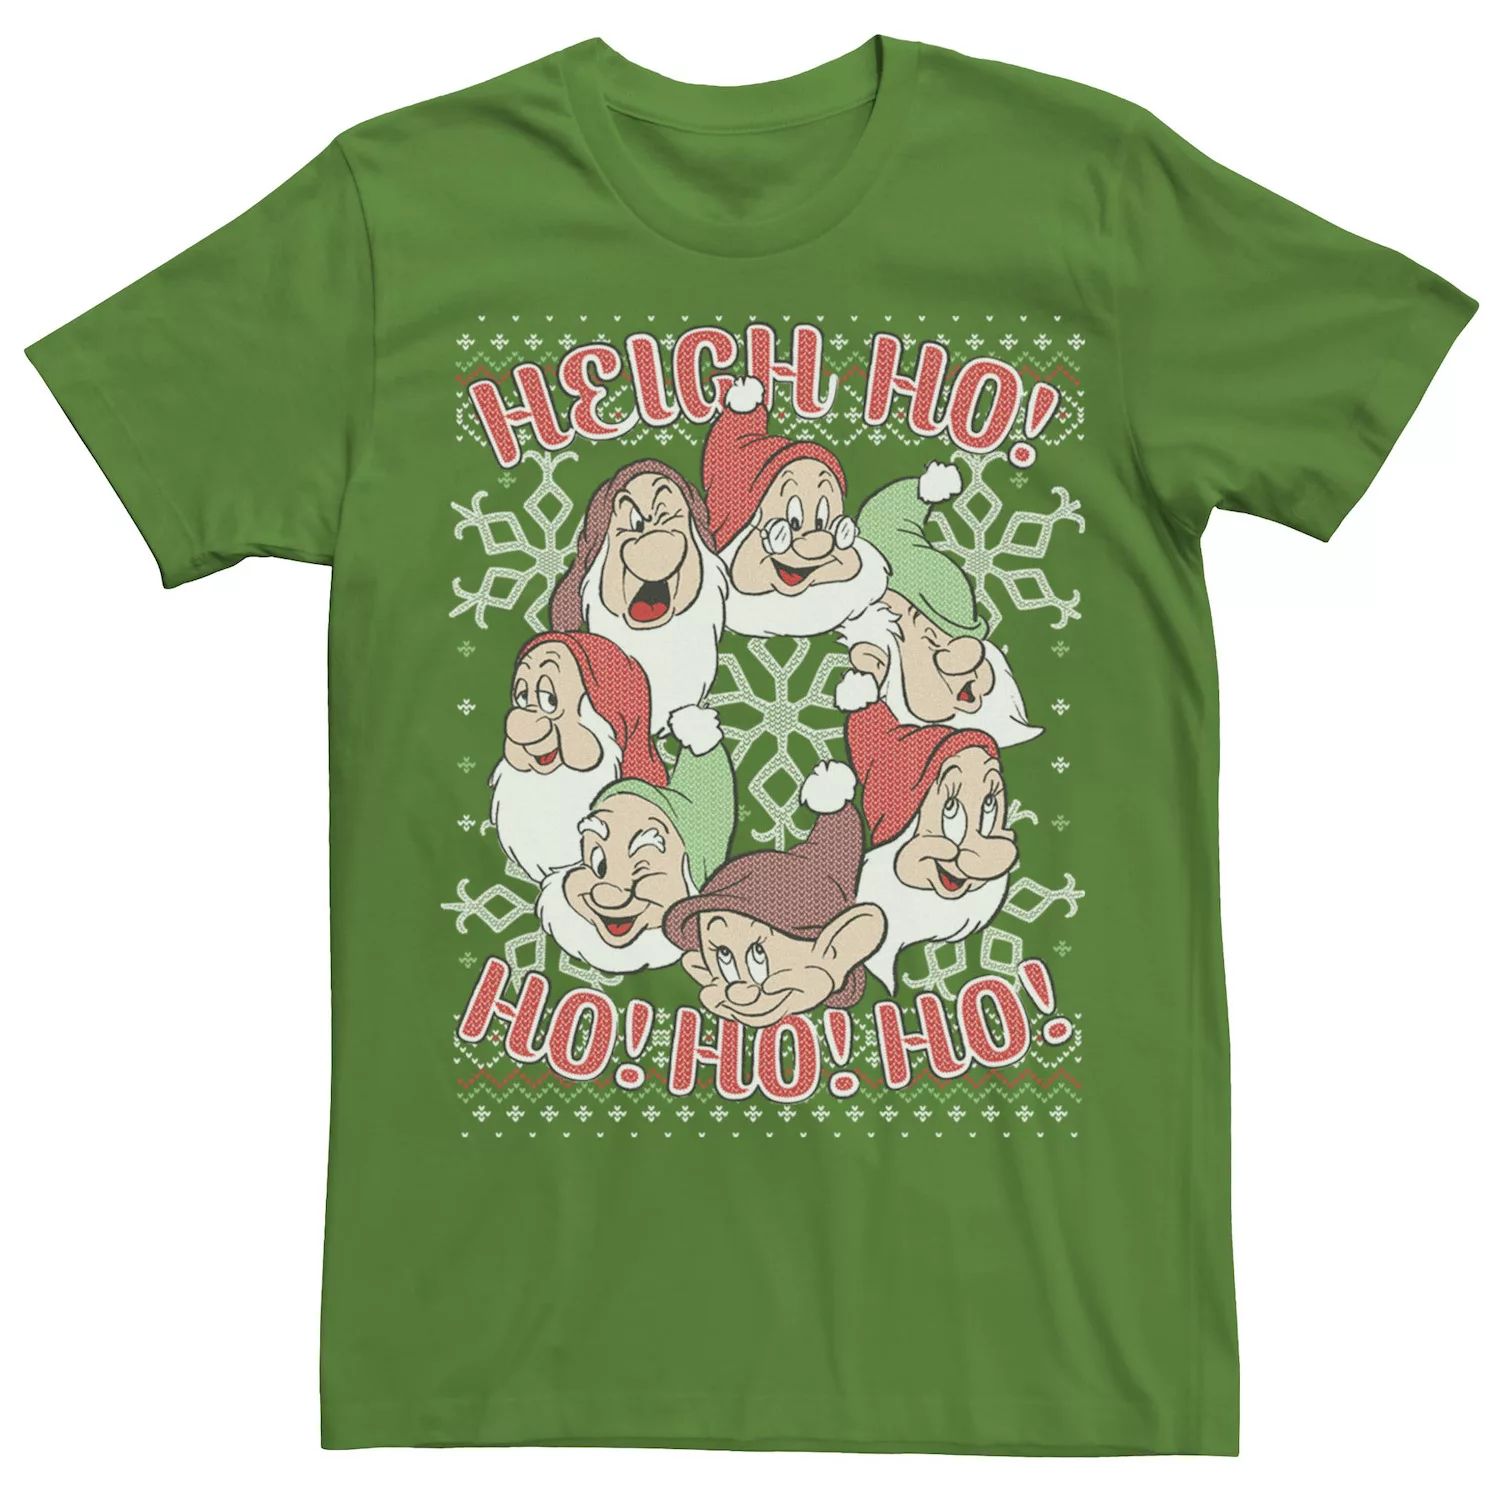 Мужская футболка-свитер Disney Snow White Seven Dwarf Ugly Christmas Licensed Character